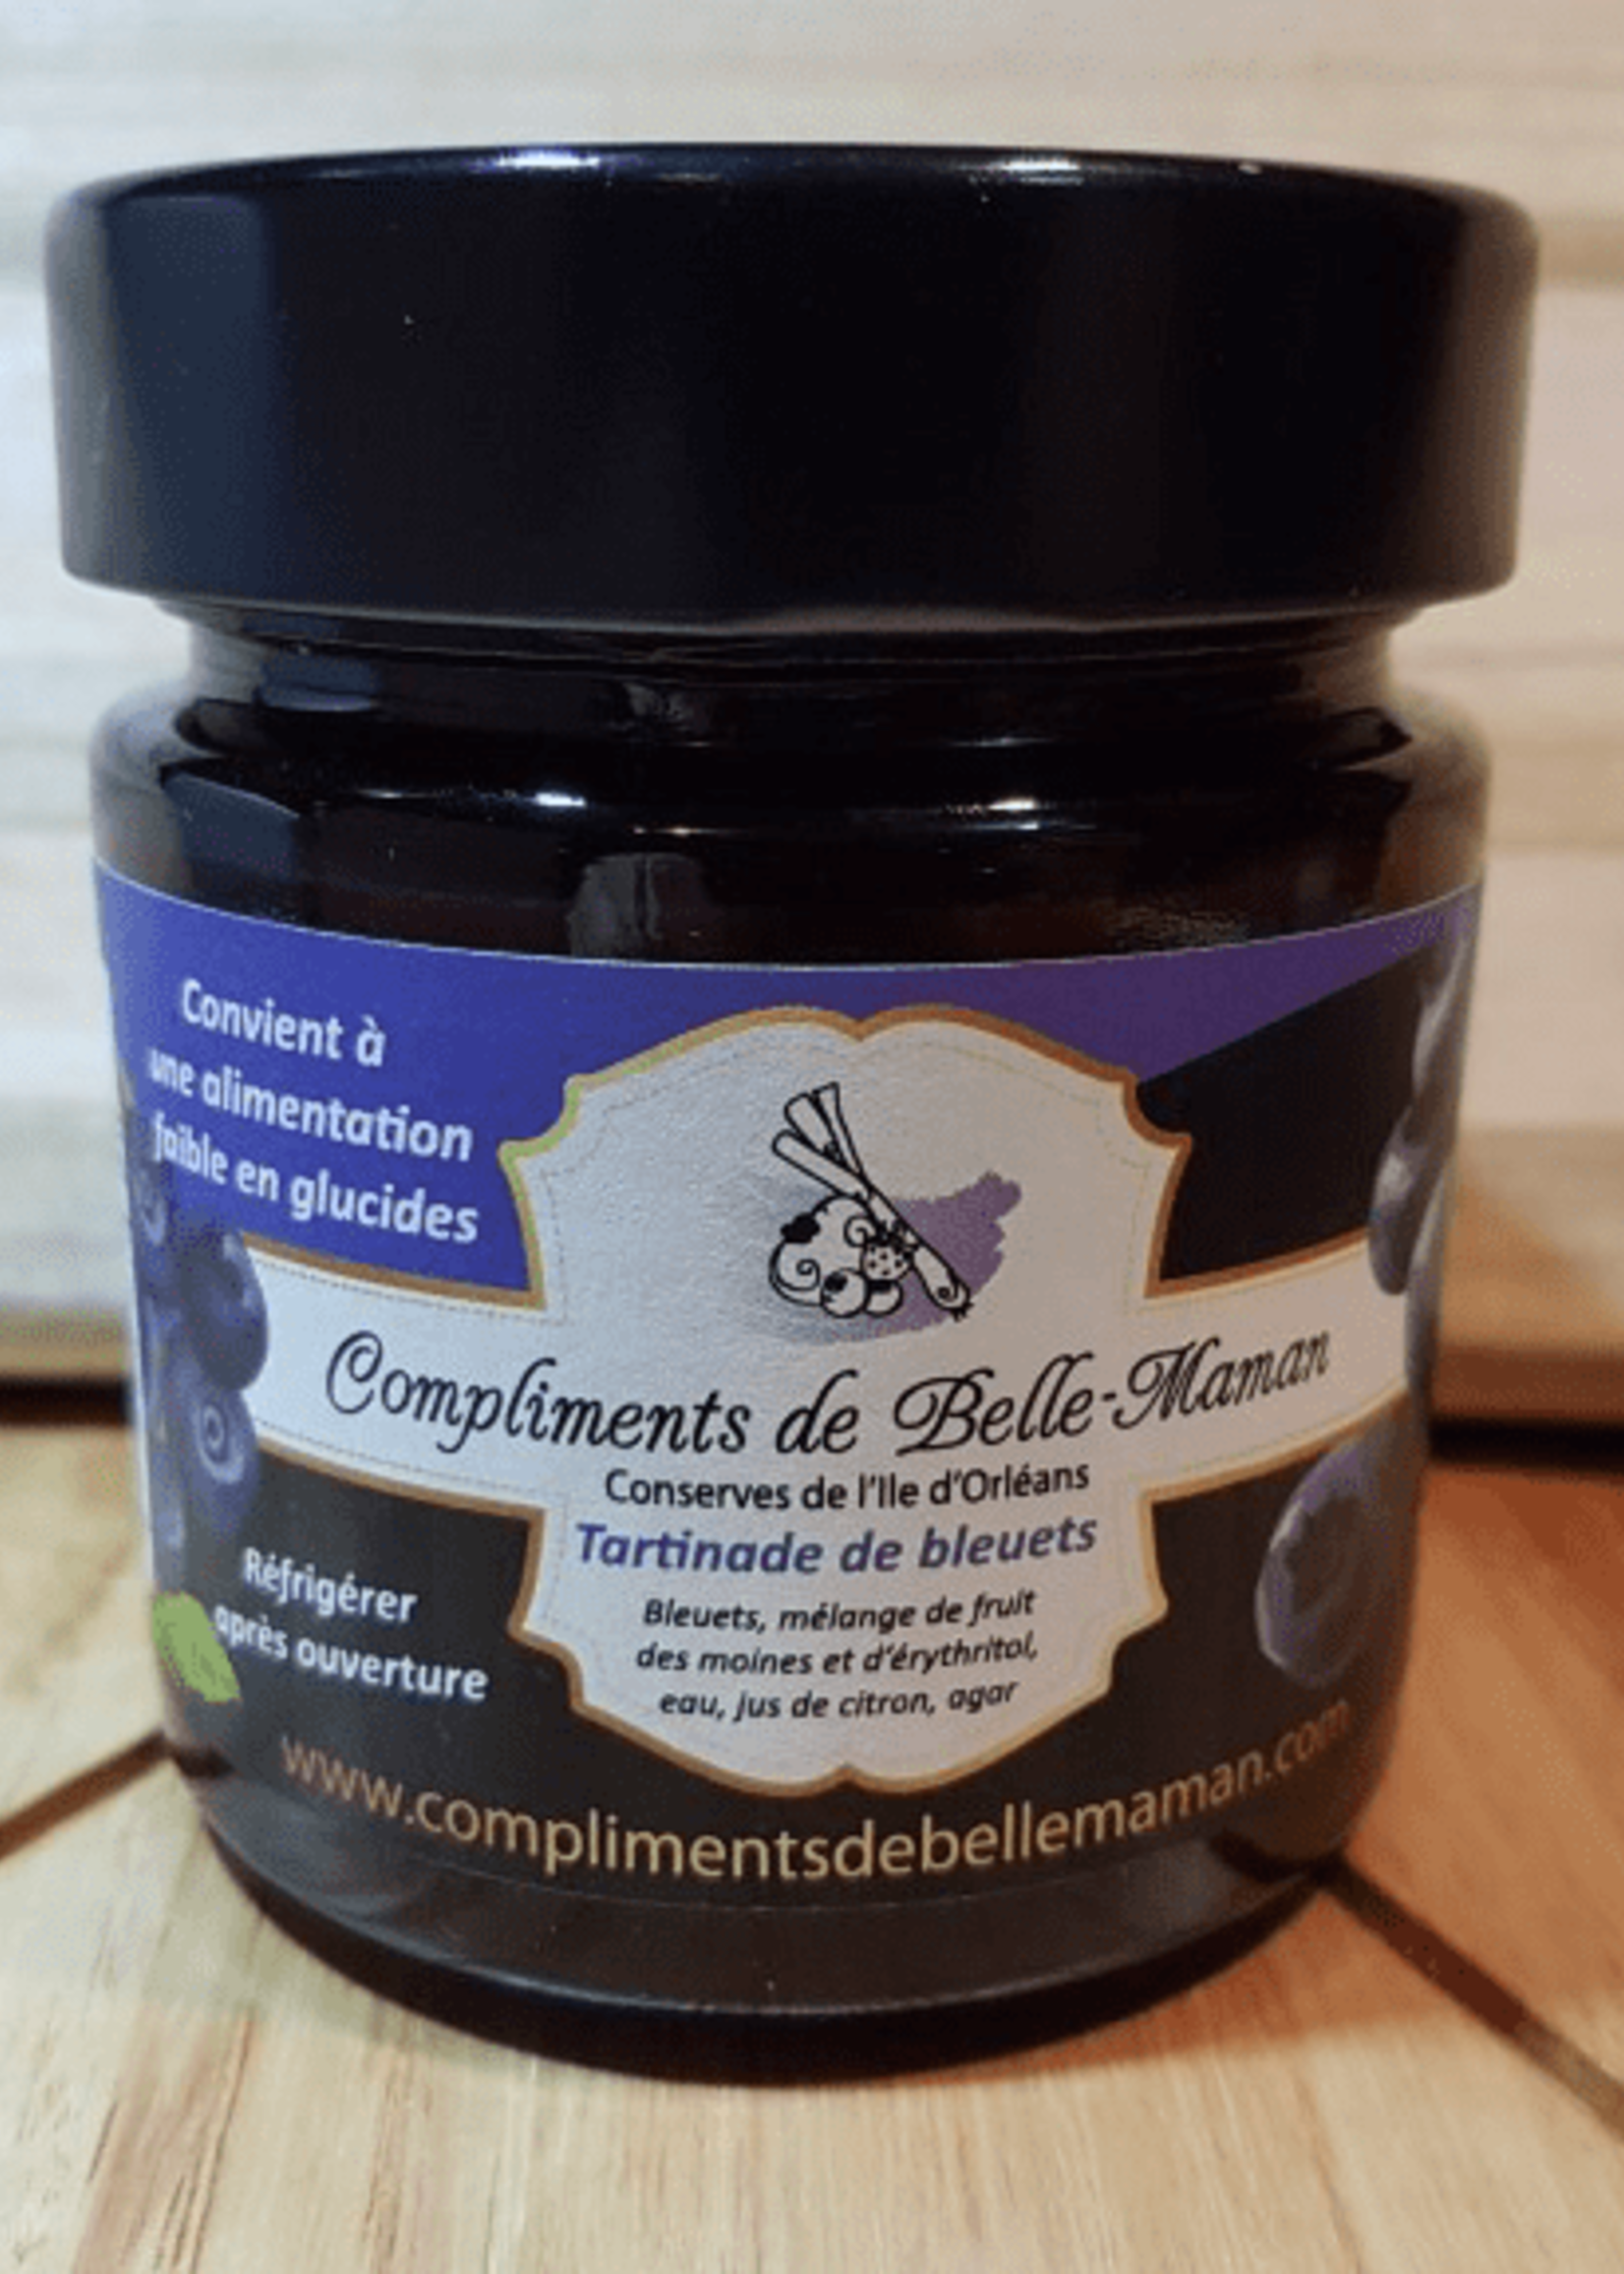 Compliments de Belle-Maman Tartinades maison 212ml (plusieurs saveurs) - Compliments de Belle-Maman